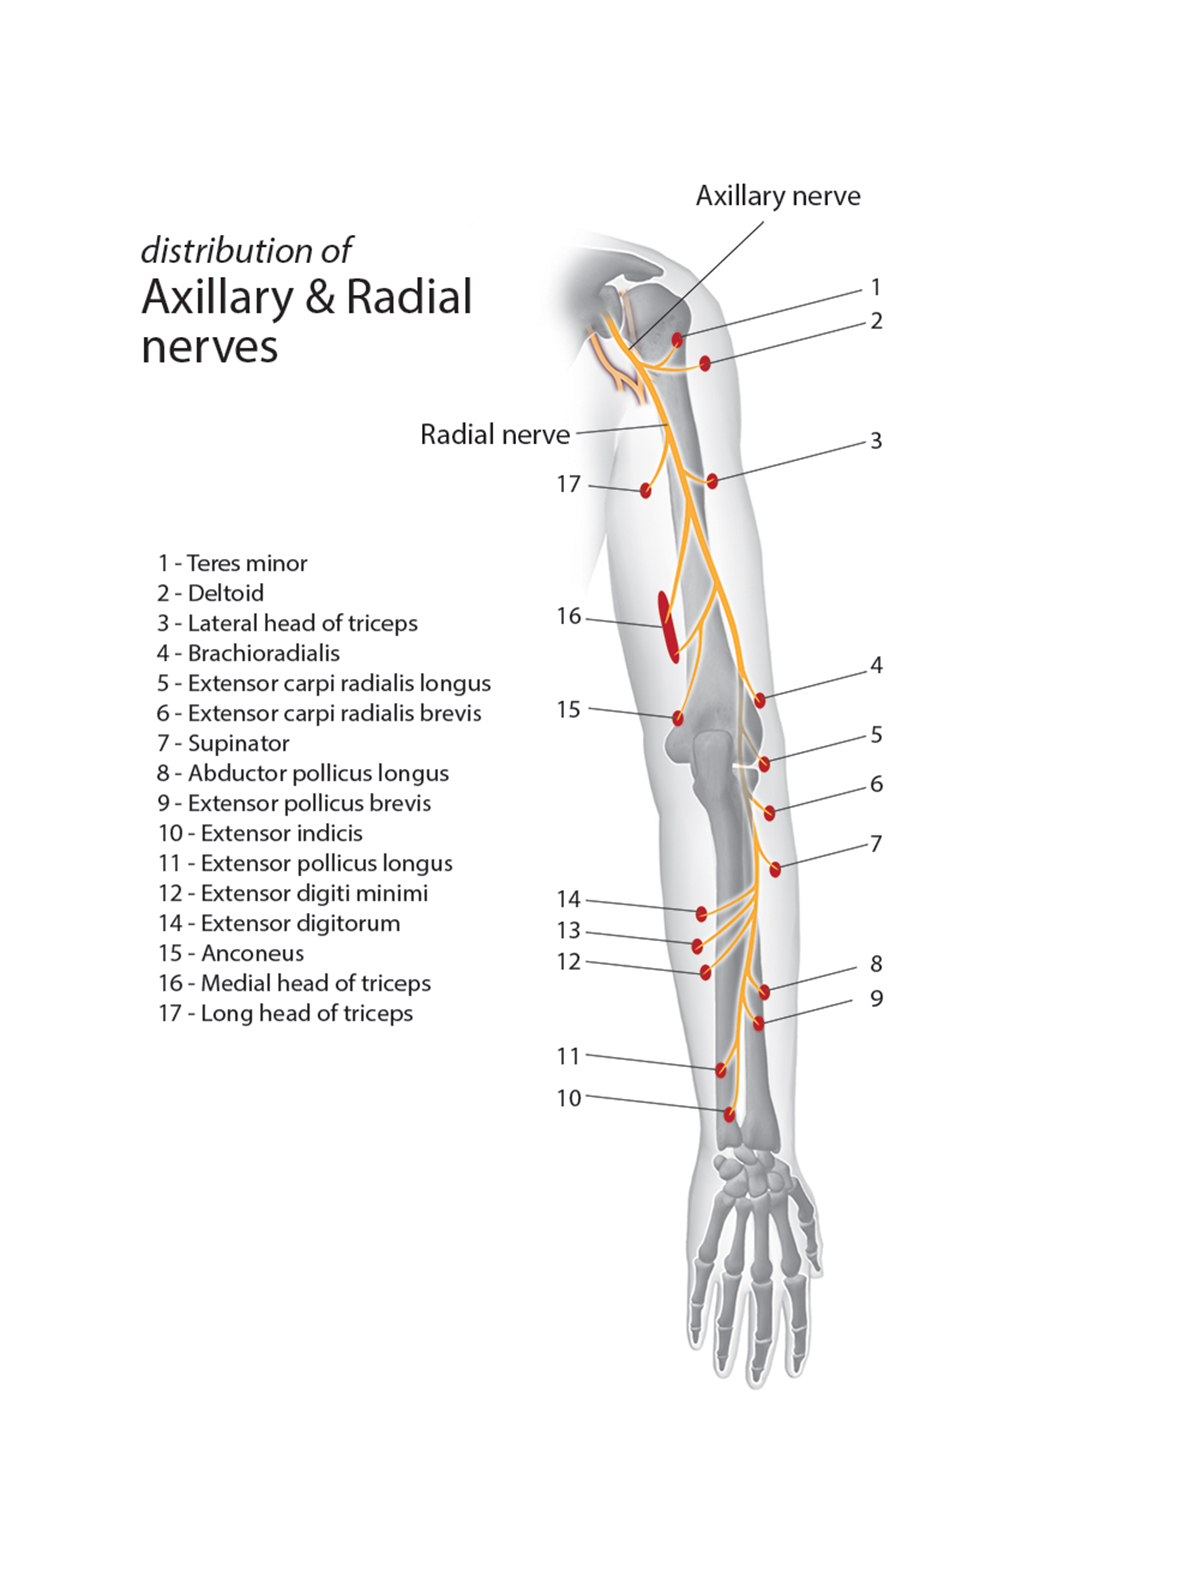 Motor innervation of the Radial Nerve